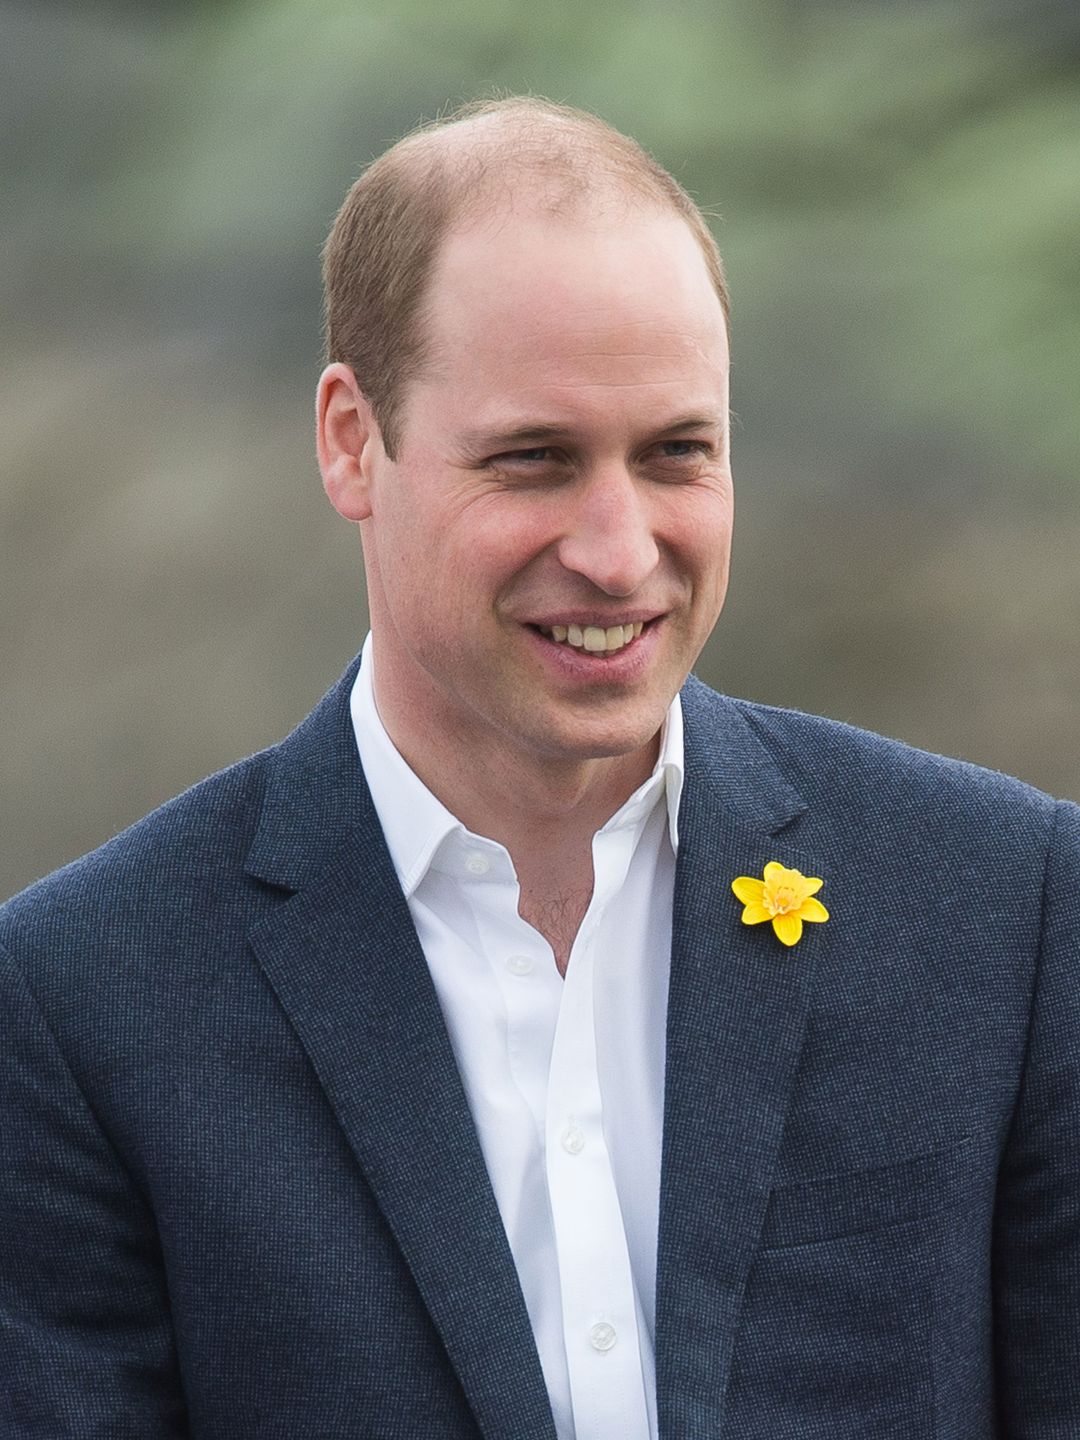 Prince William the latest news